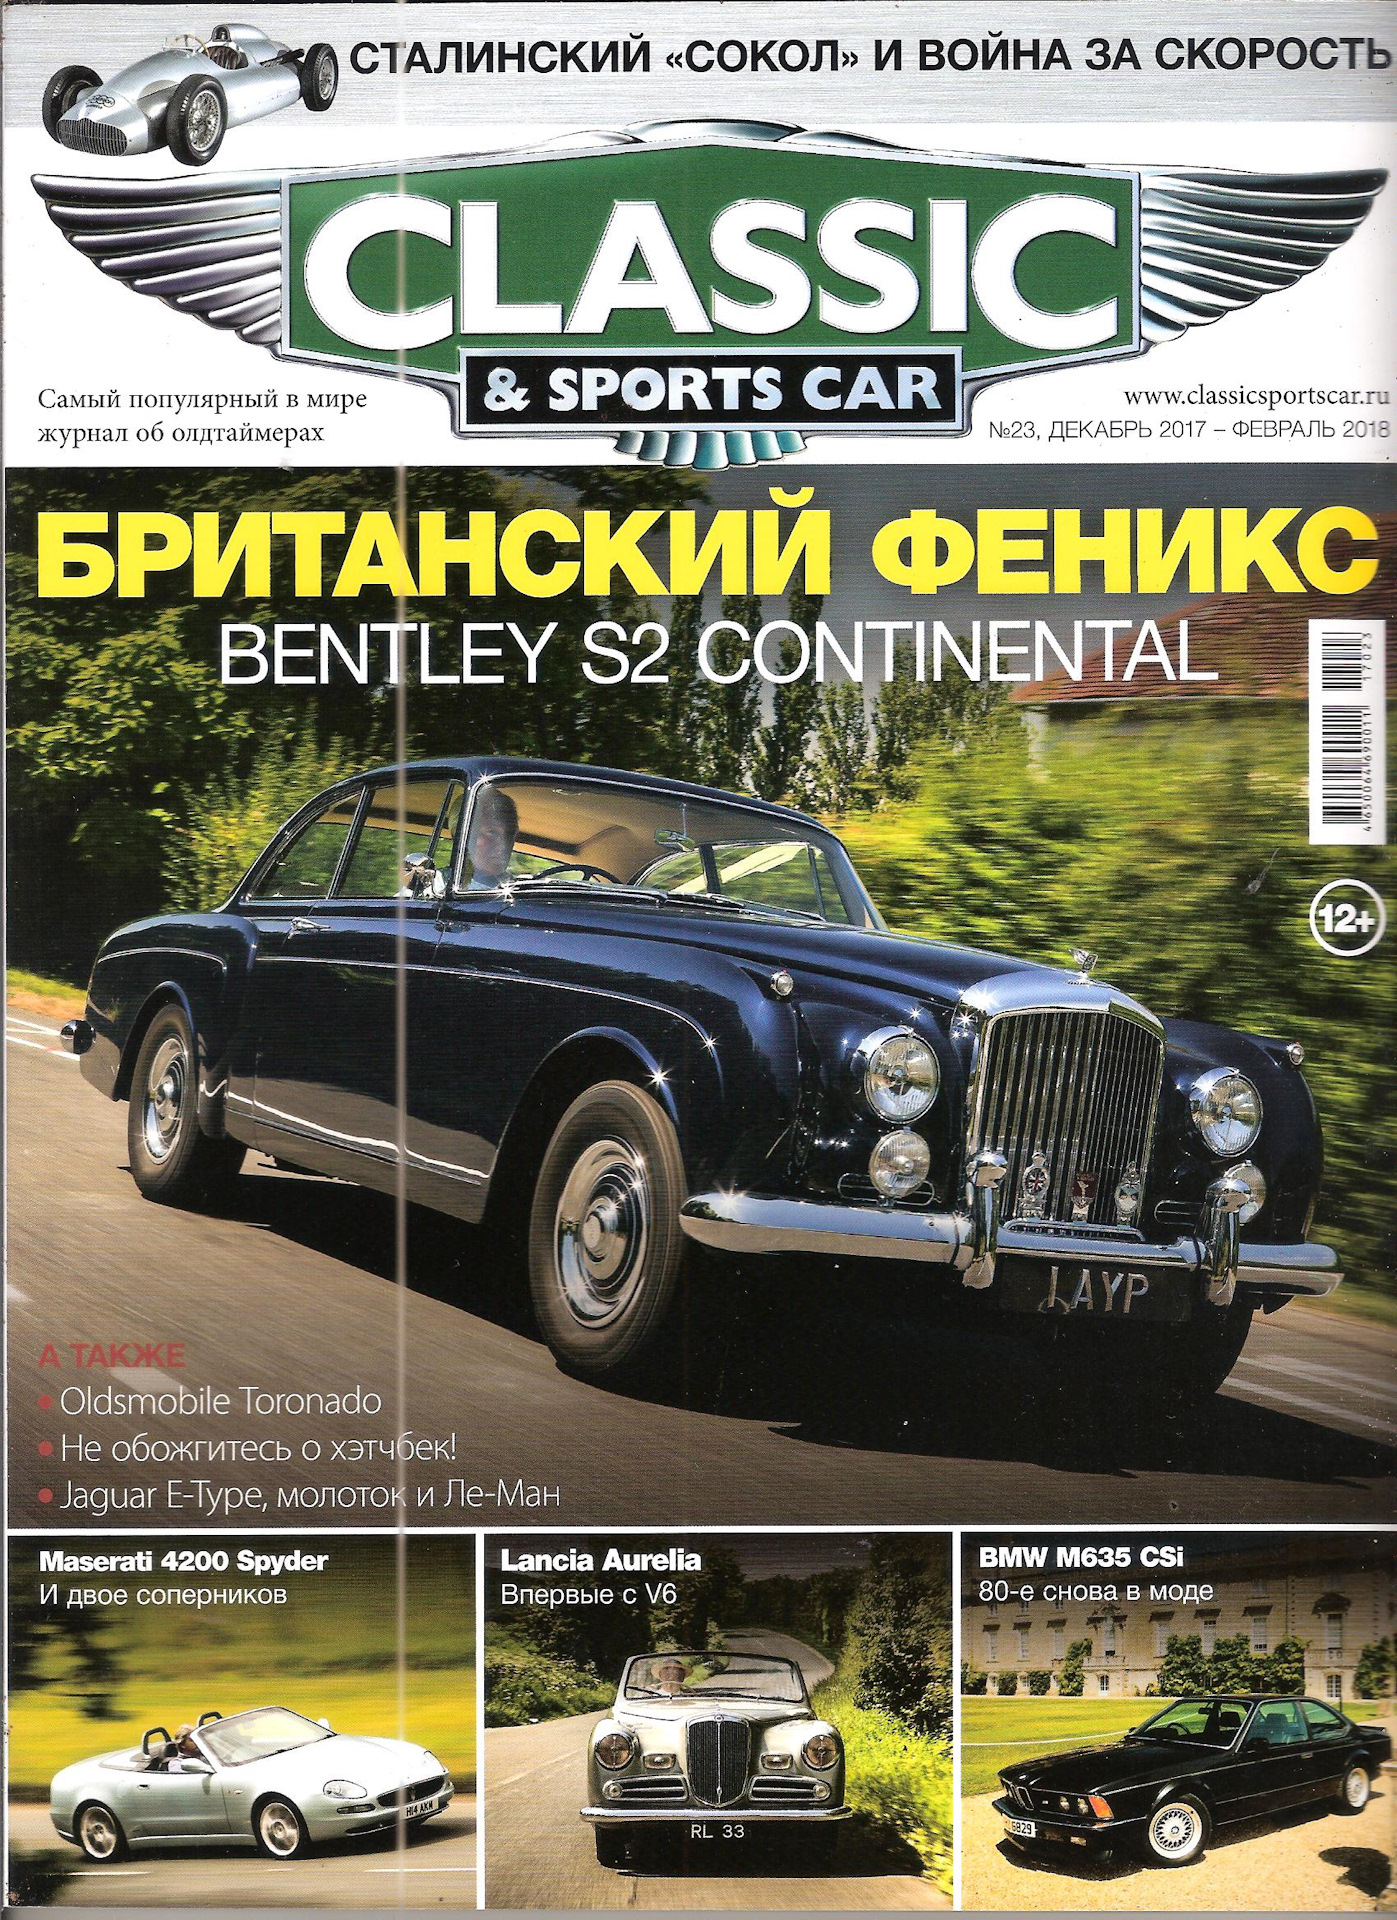 Car magazine. Классик кар журнал. Classic and Sports cars Magazine. Журнал Classic Sports car Russia. Страницы из авто журналов классика.